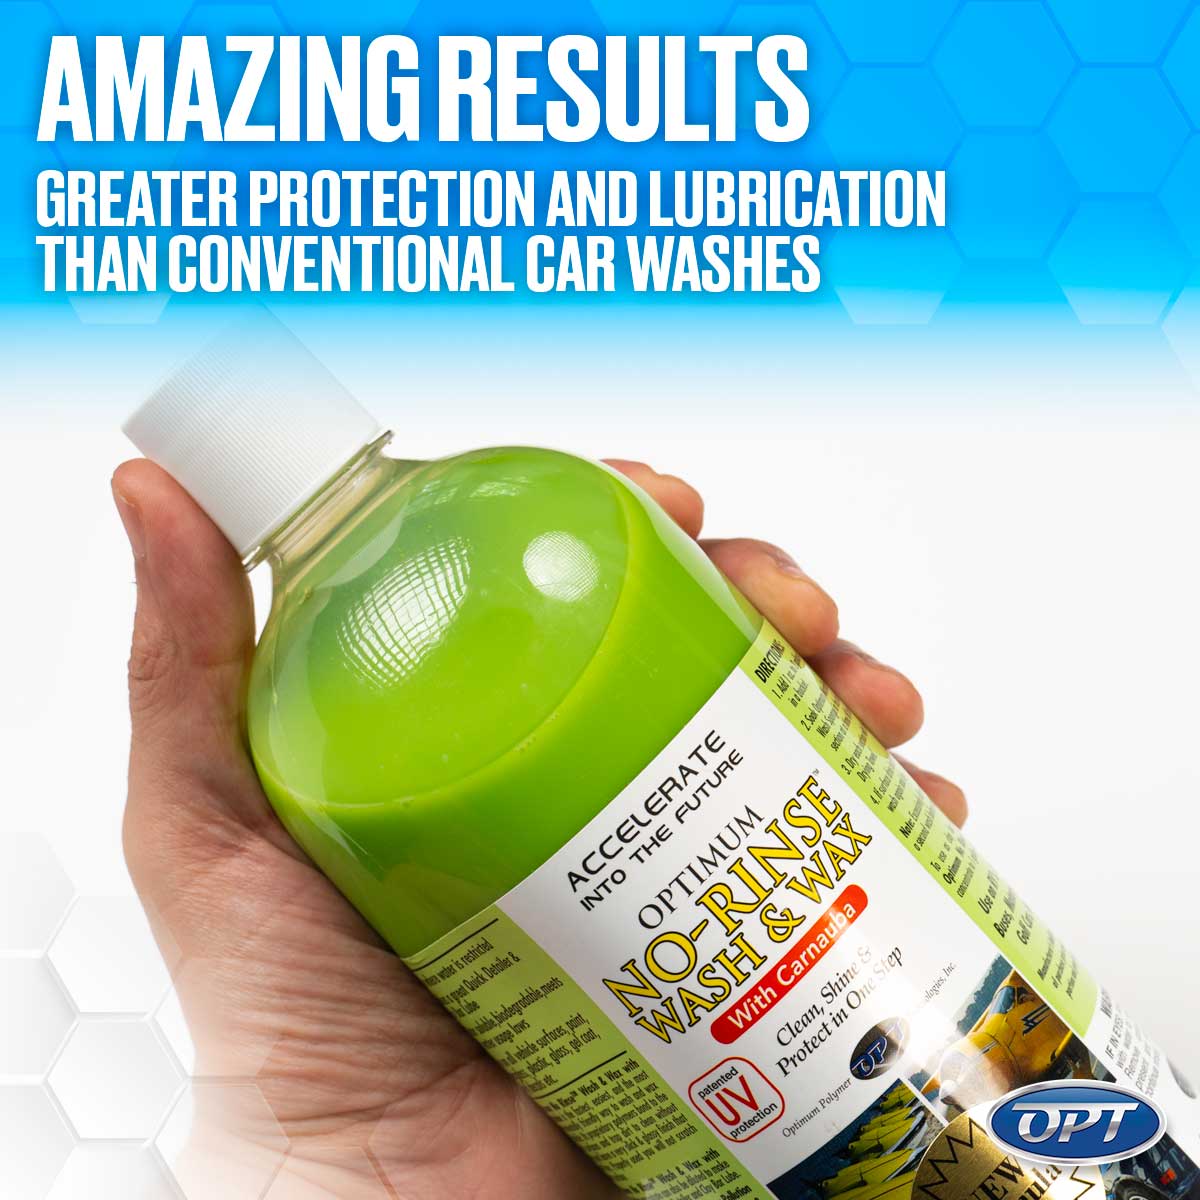 Optimum No Rinse Wash & Shine 32oz (NEW FORMULA) - REFLECTIONS CAR CARE